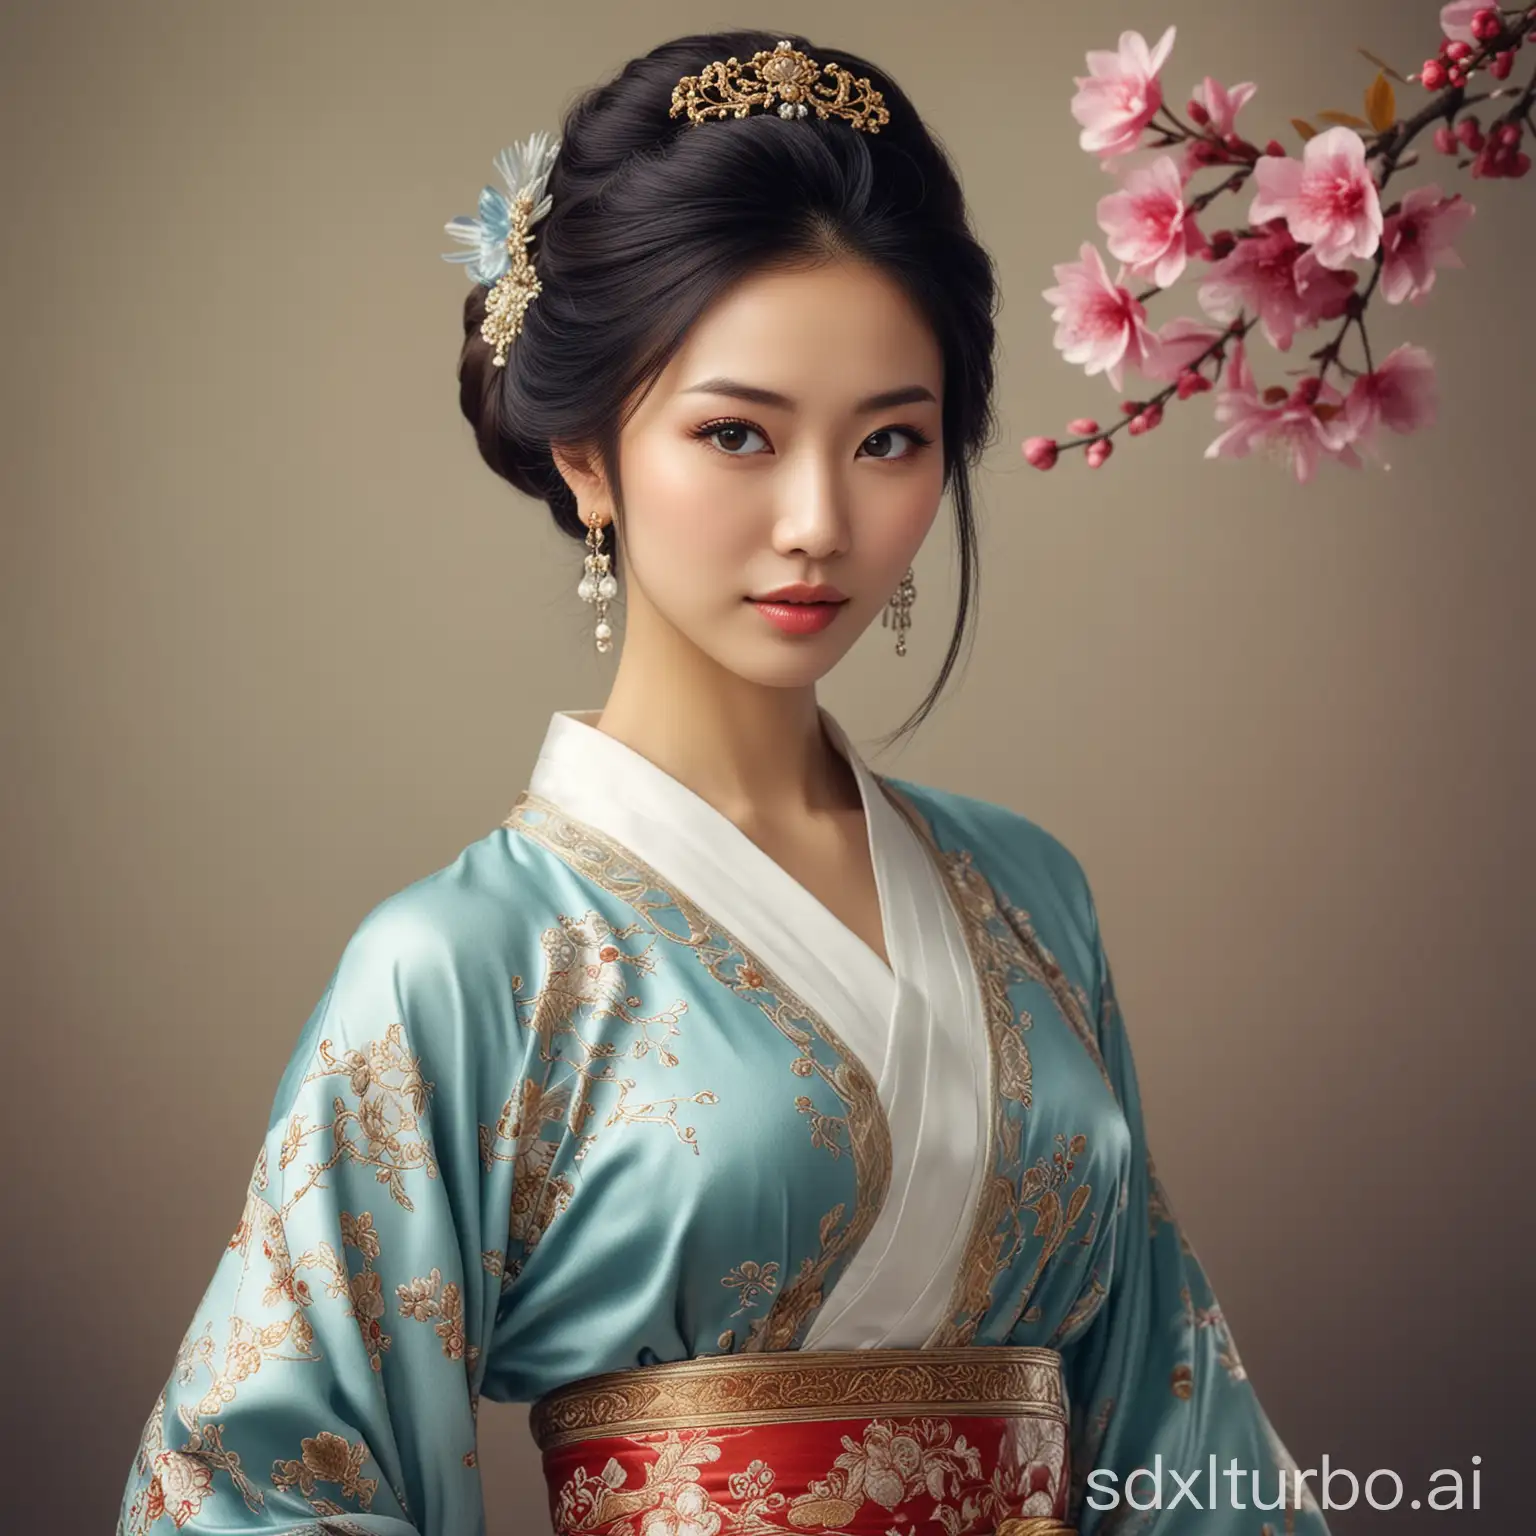 Elegant-Oriental-Woman-in-Fashionable-Attire